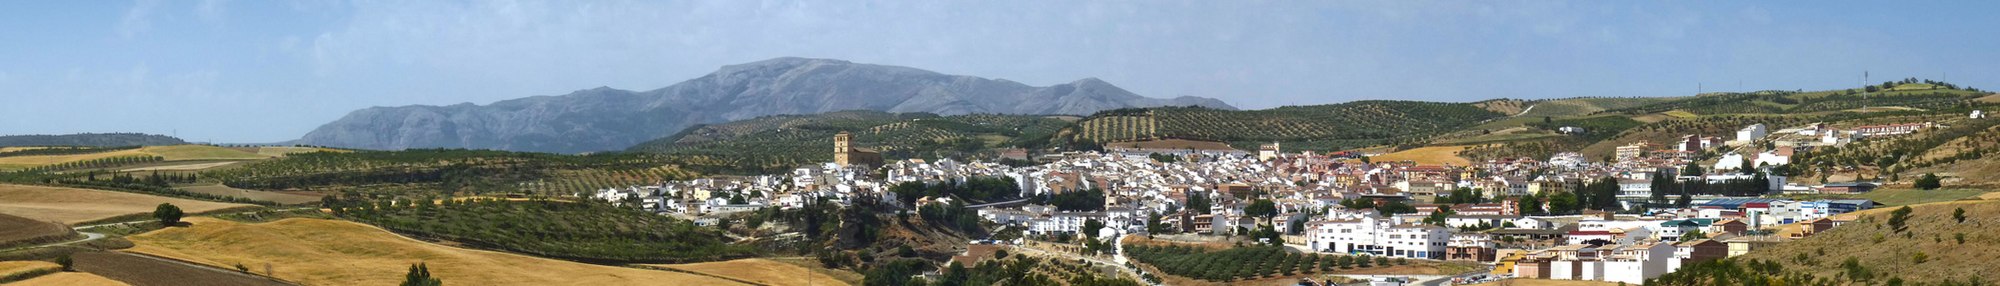 Alhama de Granada banner.jpg